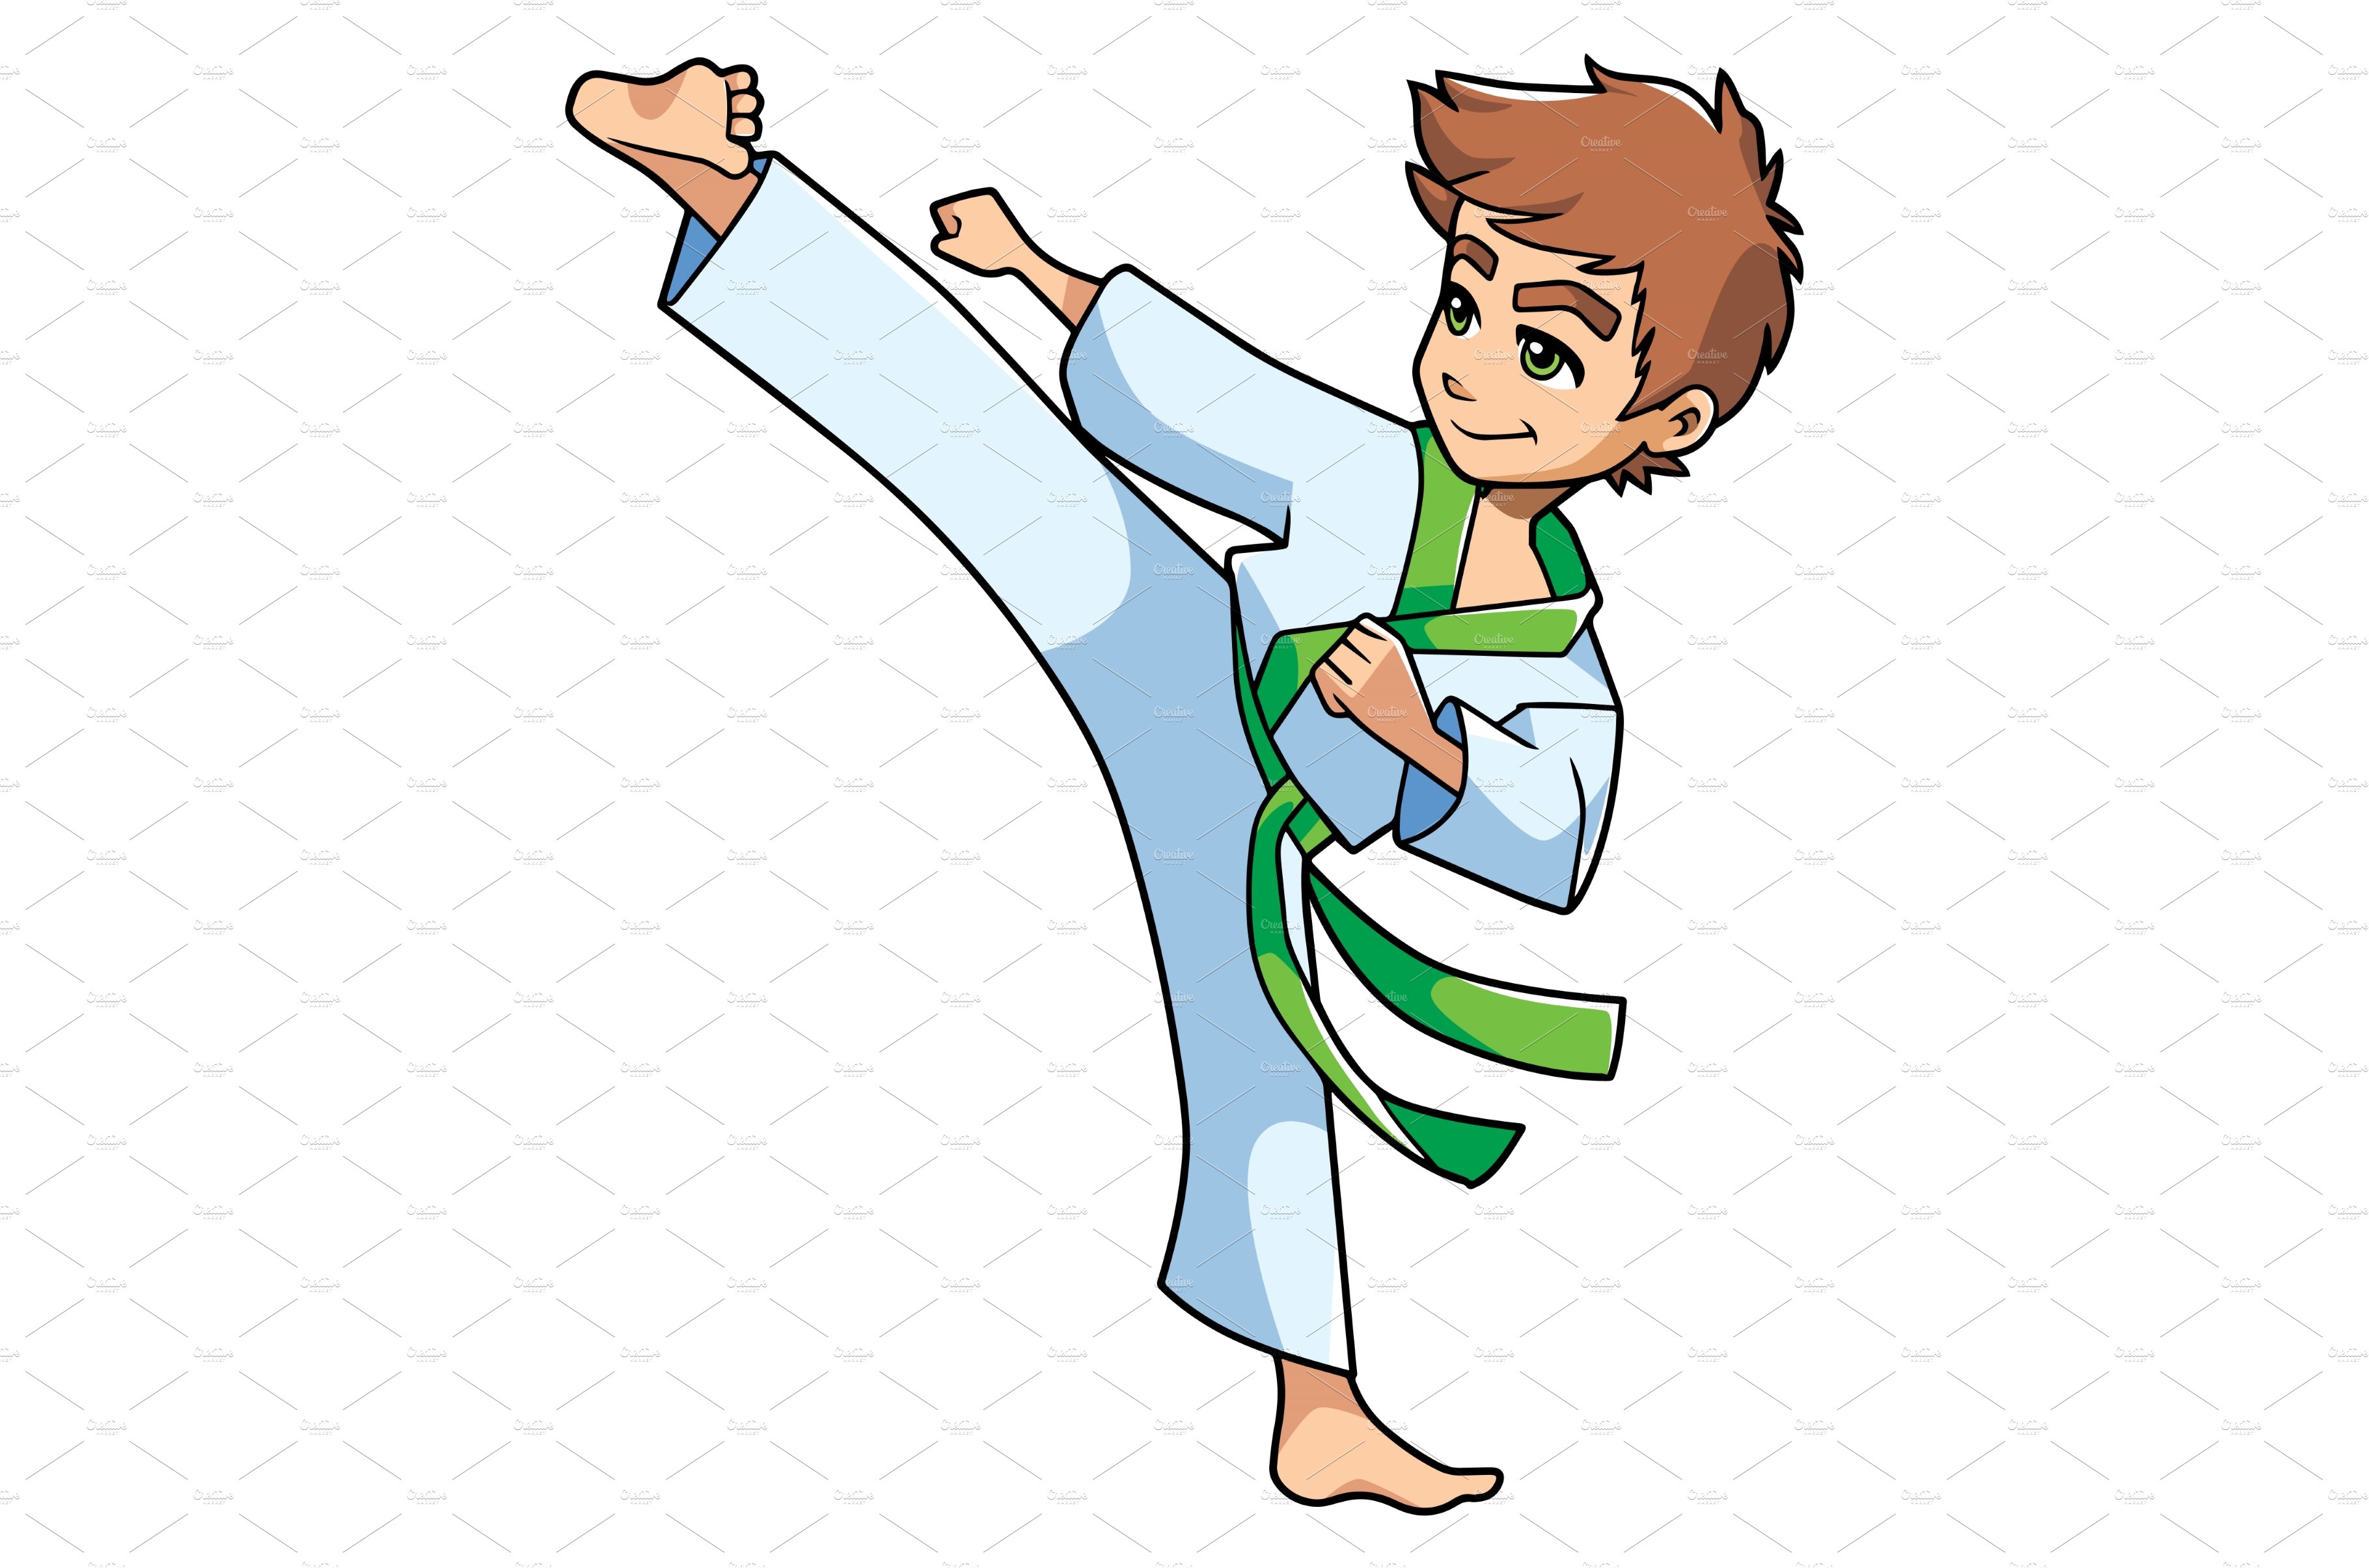 Karate Kick Boy cover image.